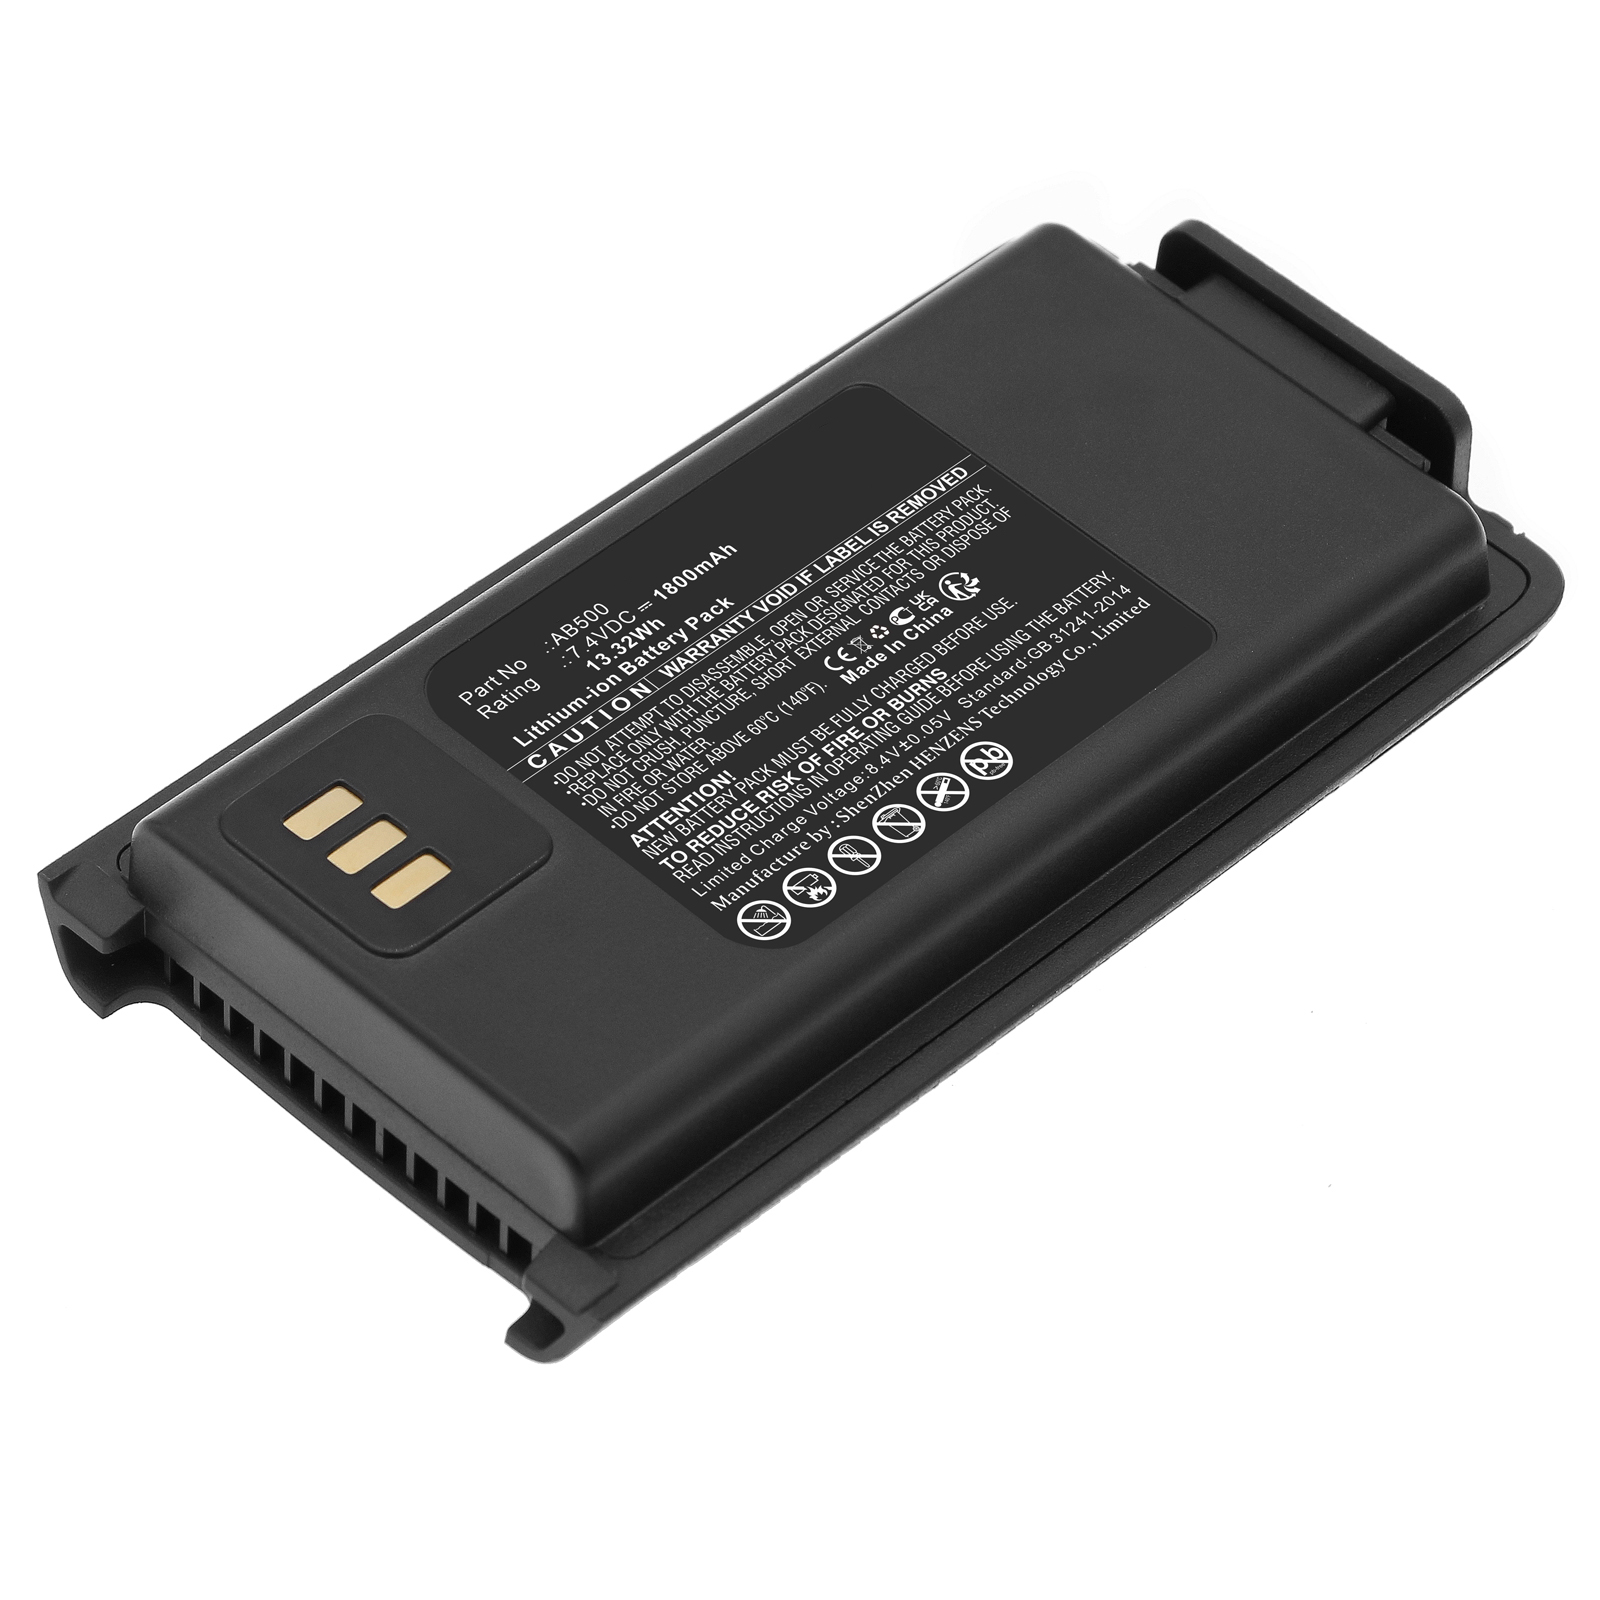 Synergy Digital Communication Battery, Compatible with ZTE AB500 Communication Battery (Li-ion, 7.4V, 1800mAh)